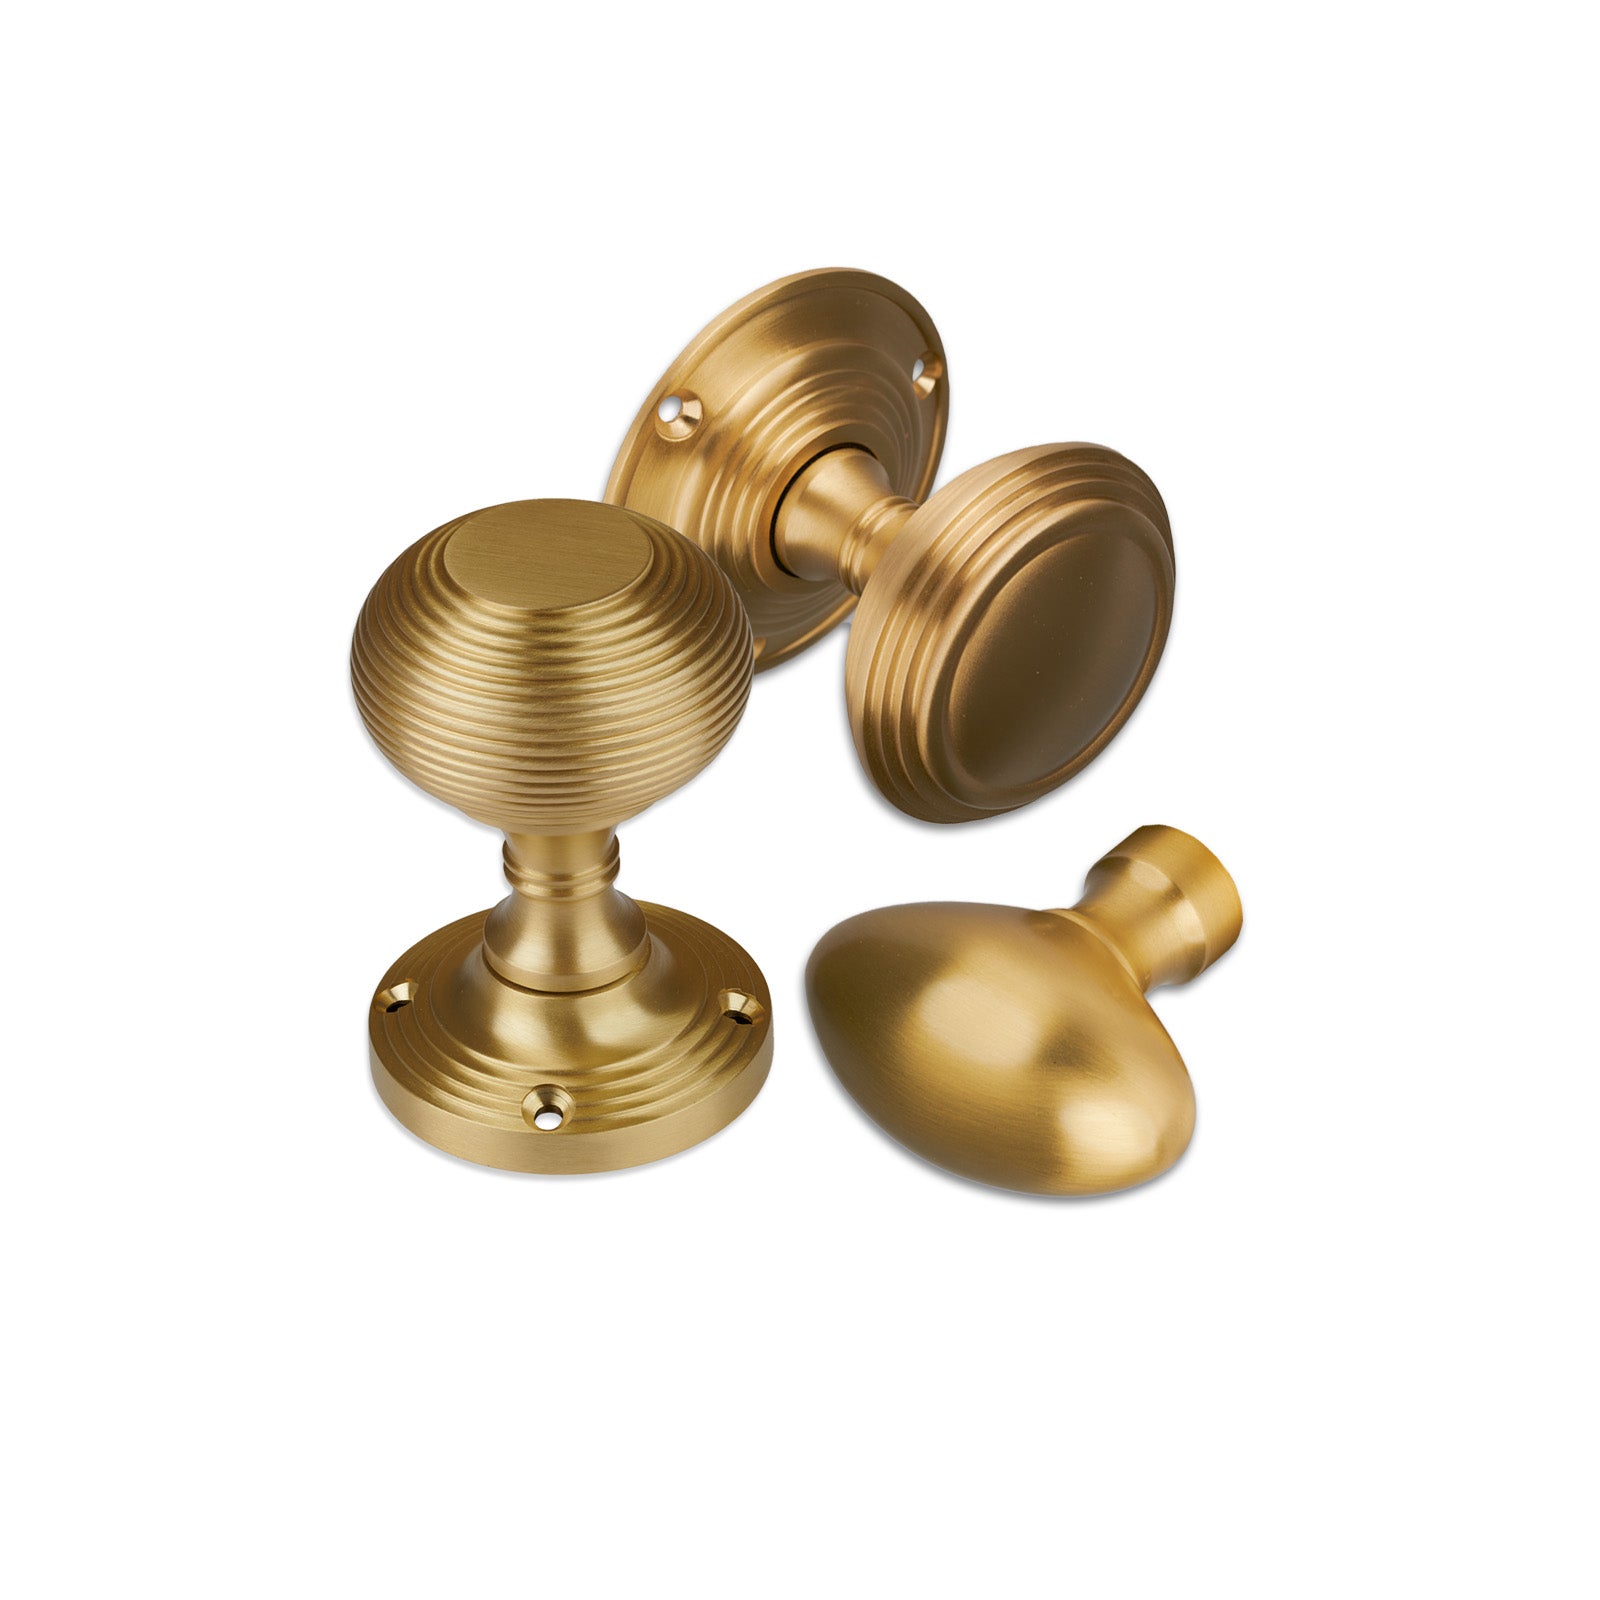 Satin Brass Mushroom Mortice/Rim Knob Set Brass Door Knobs, Door Furniture, Brass Finishes